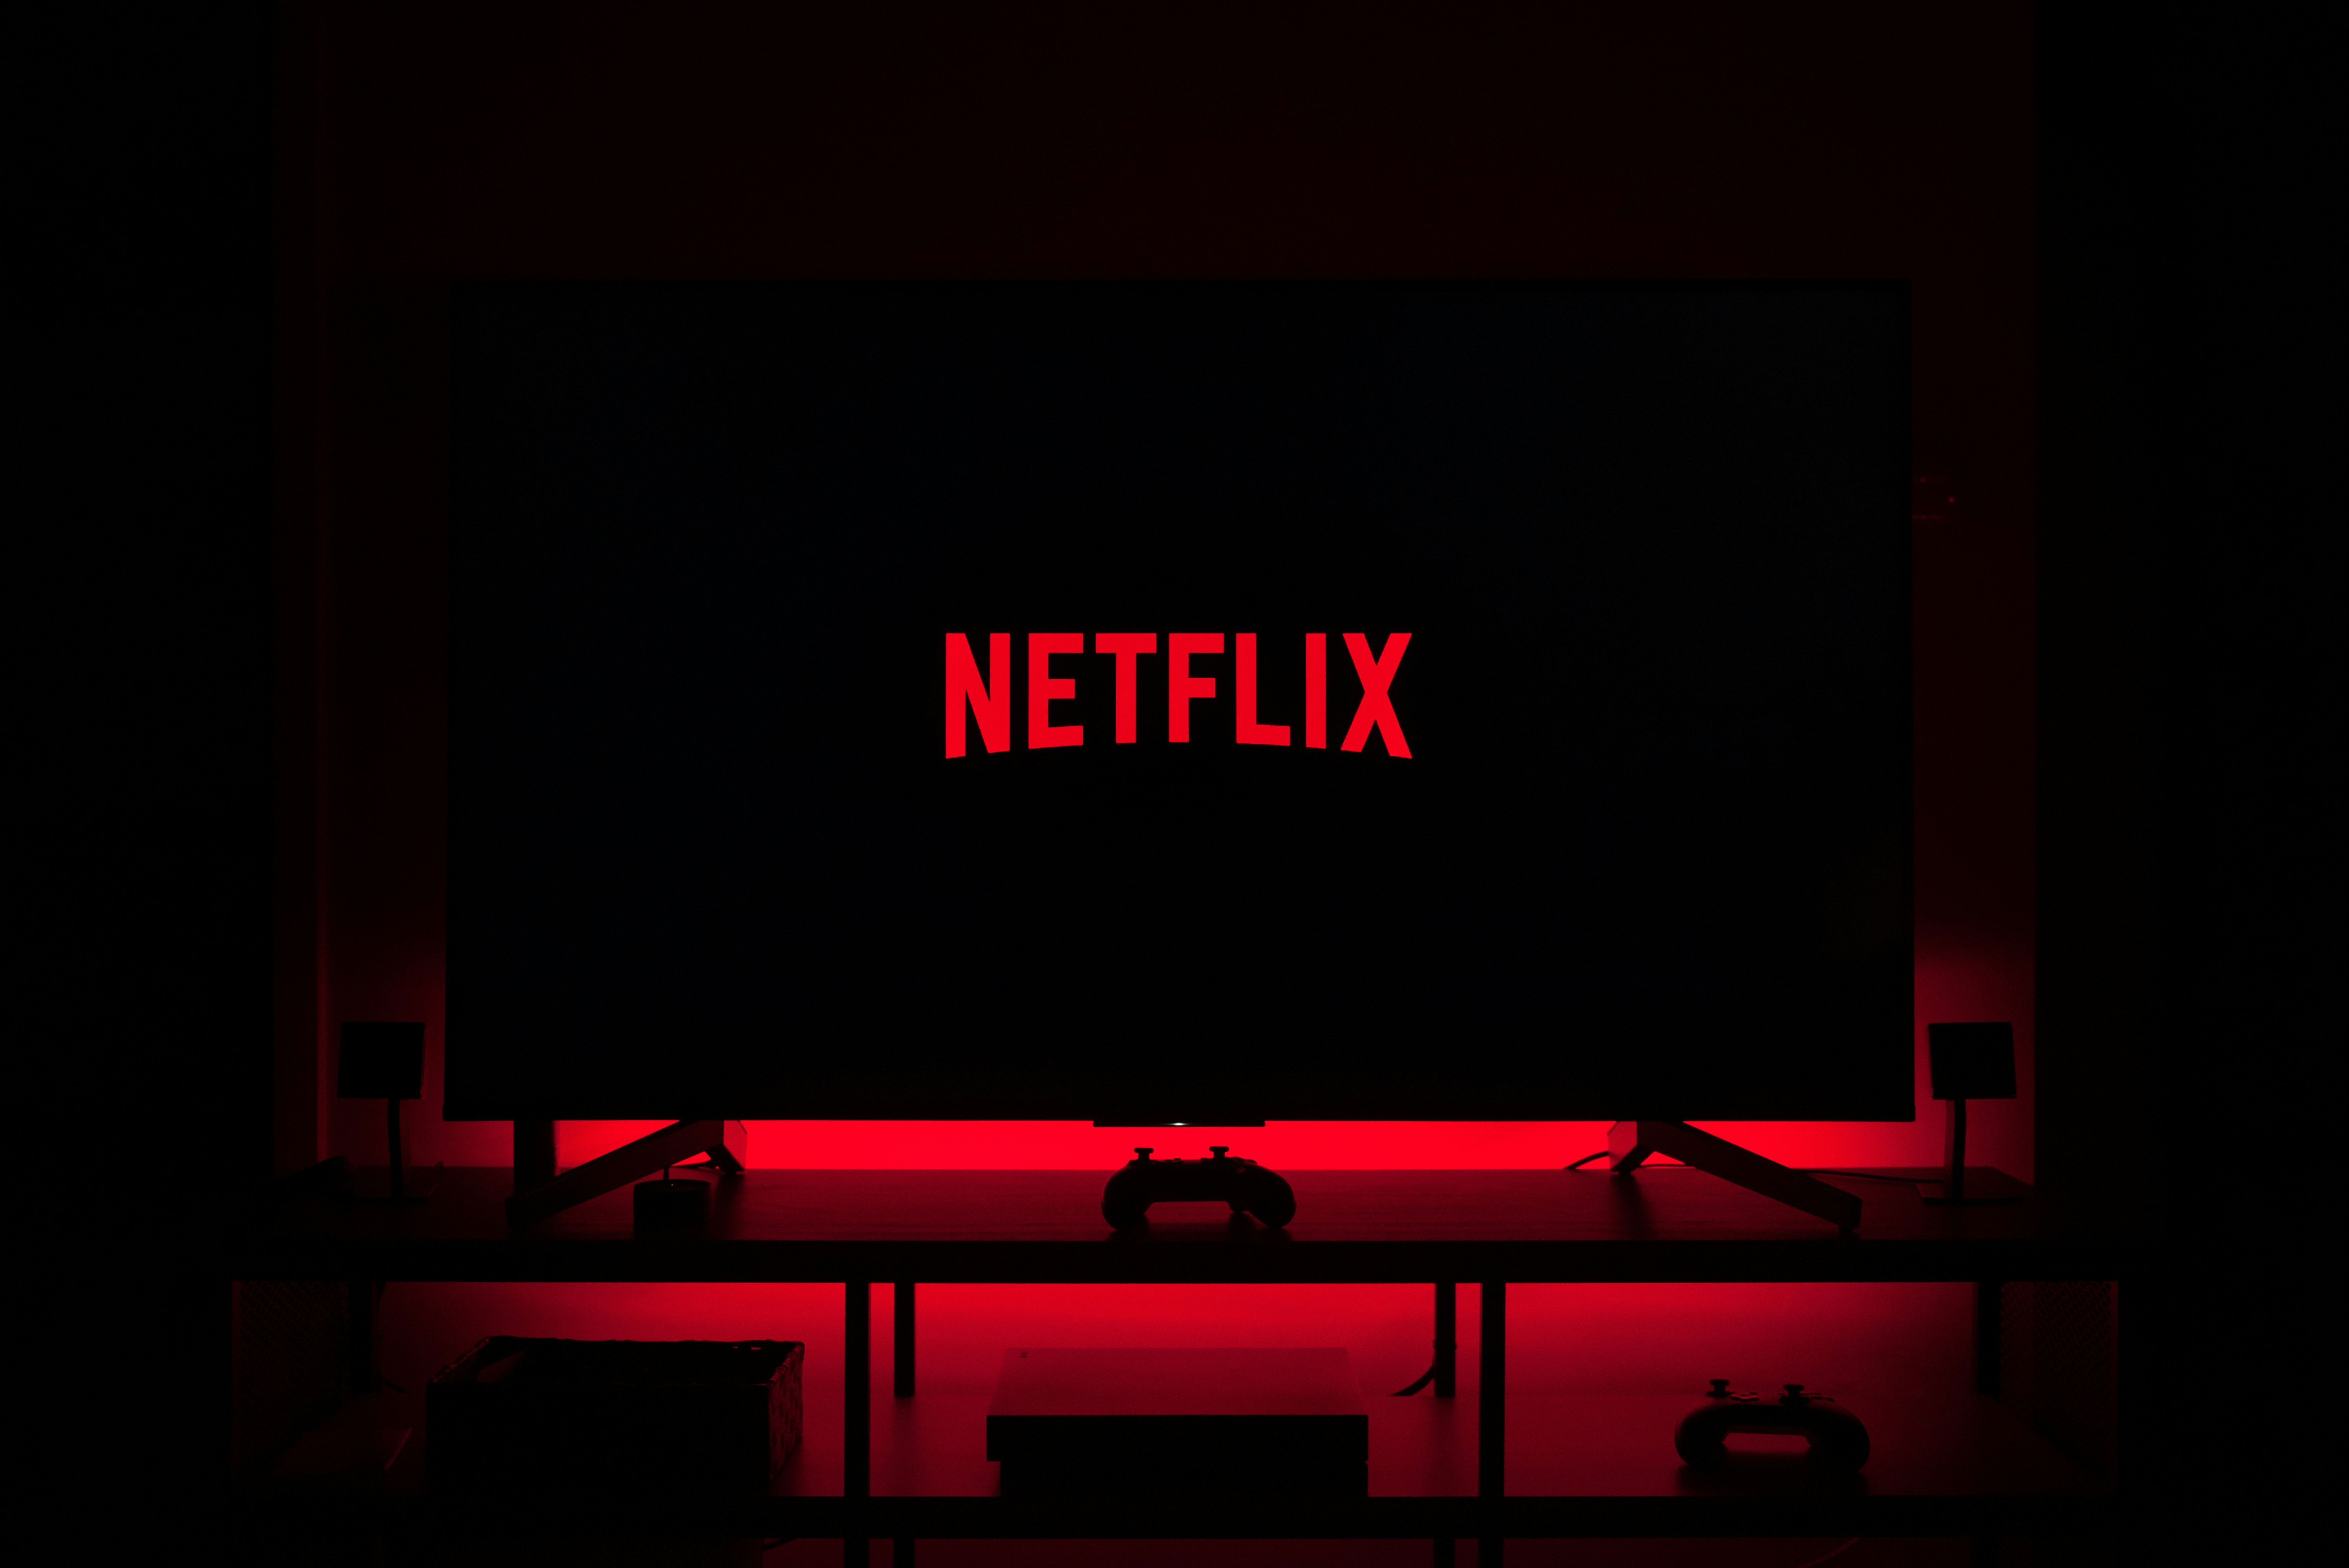 Netflix subscribers soar to half a billion